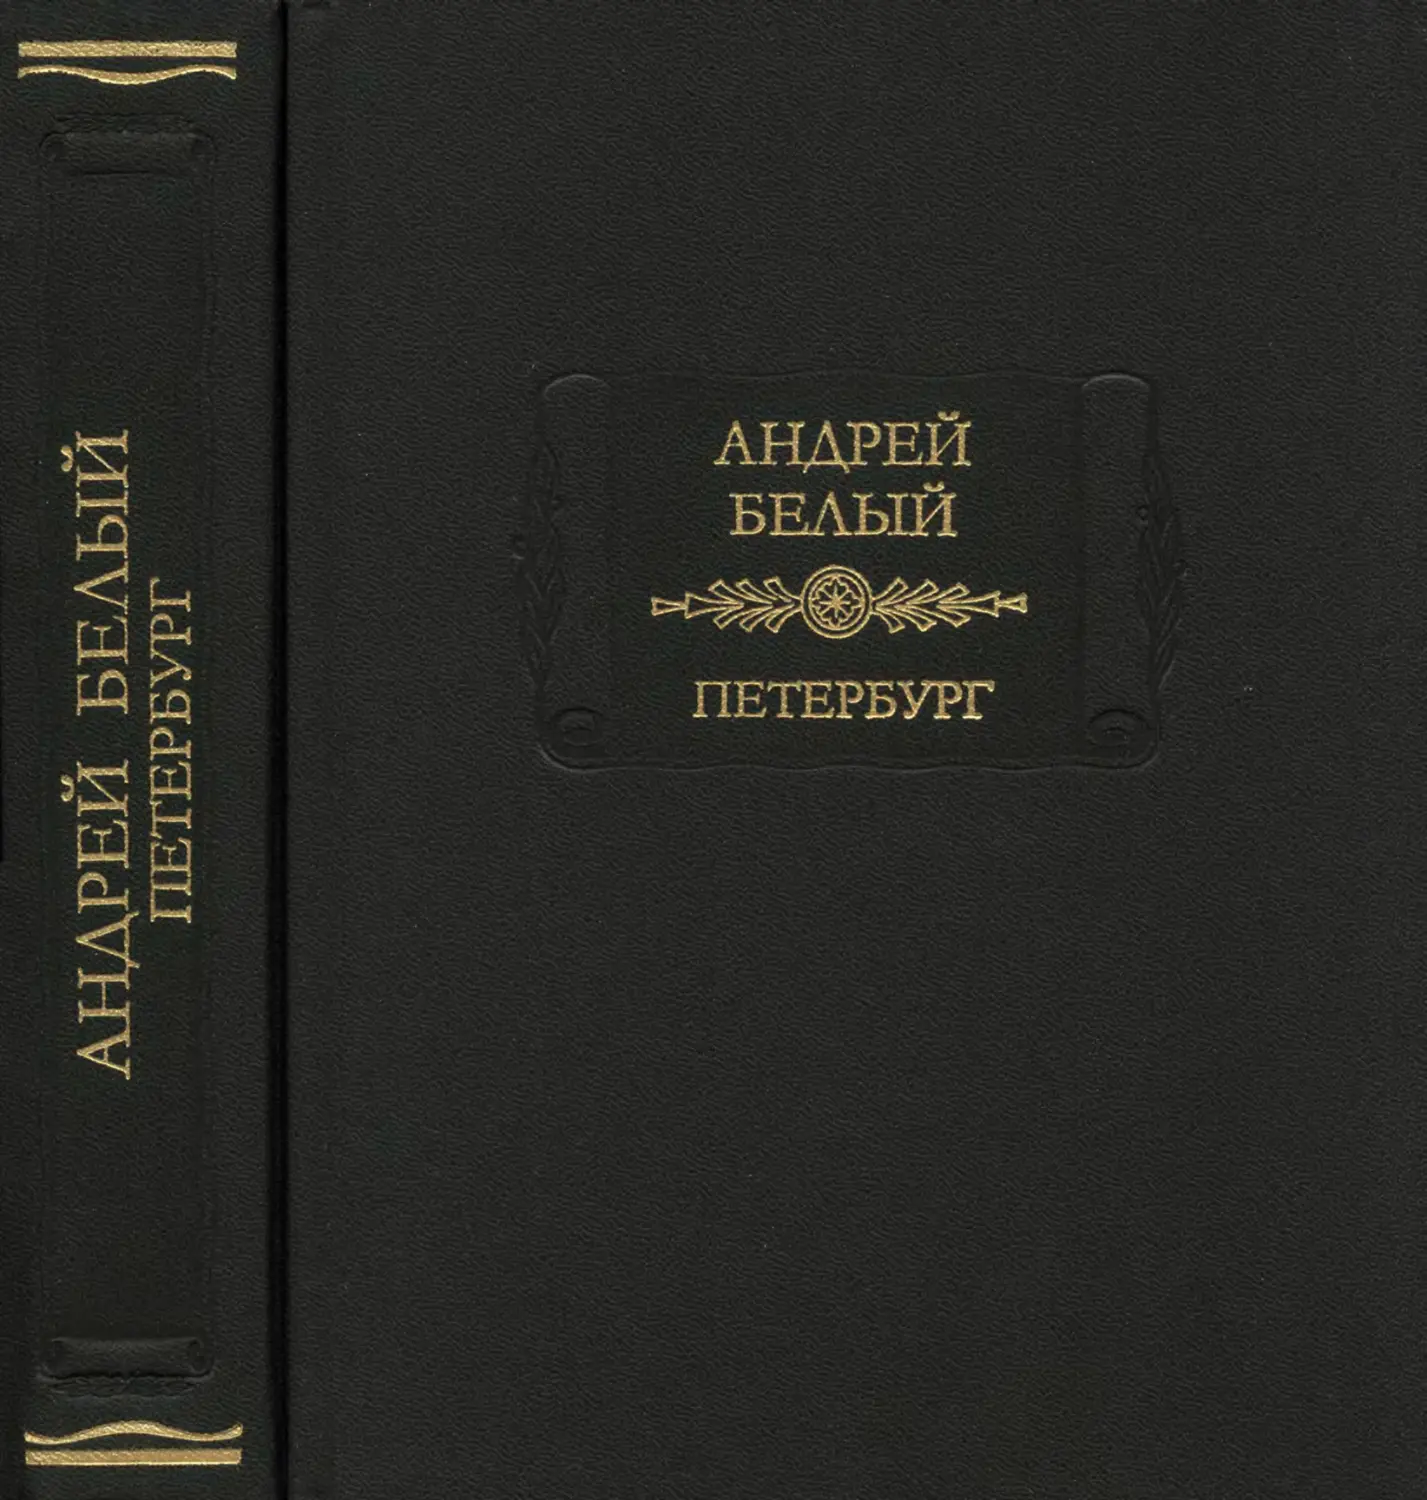 Андрей Белый. Петербург, 2-е изд. - 2004
Андрей Белый. Фото. Брюссель, 1912 г.